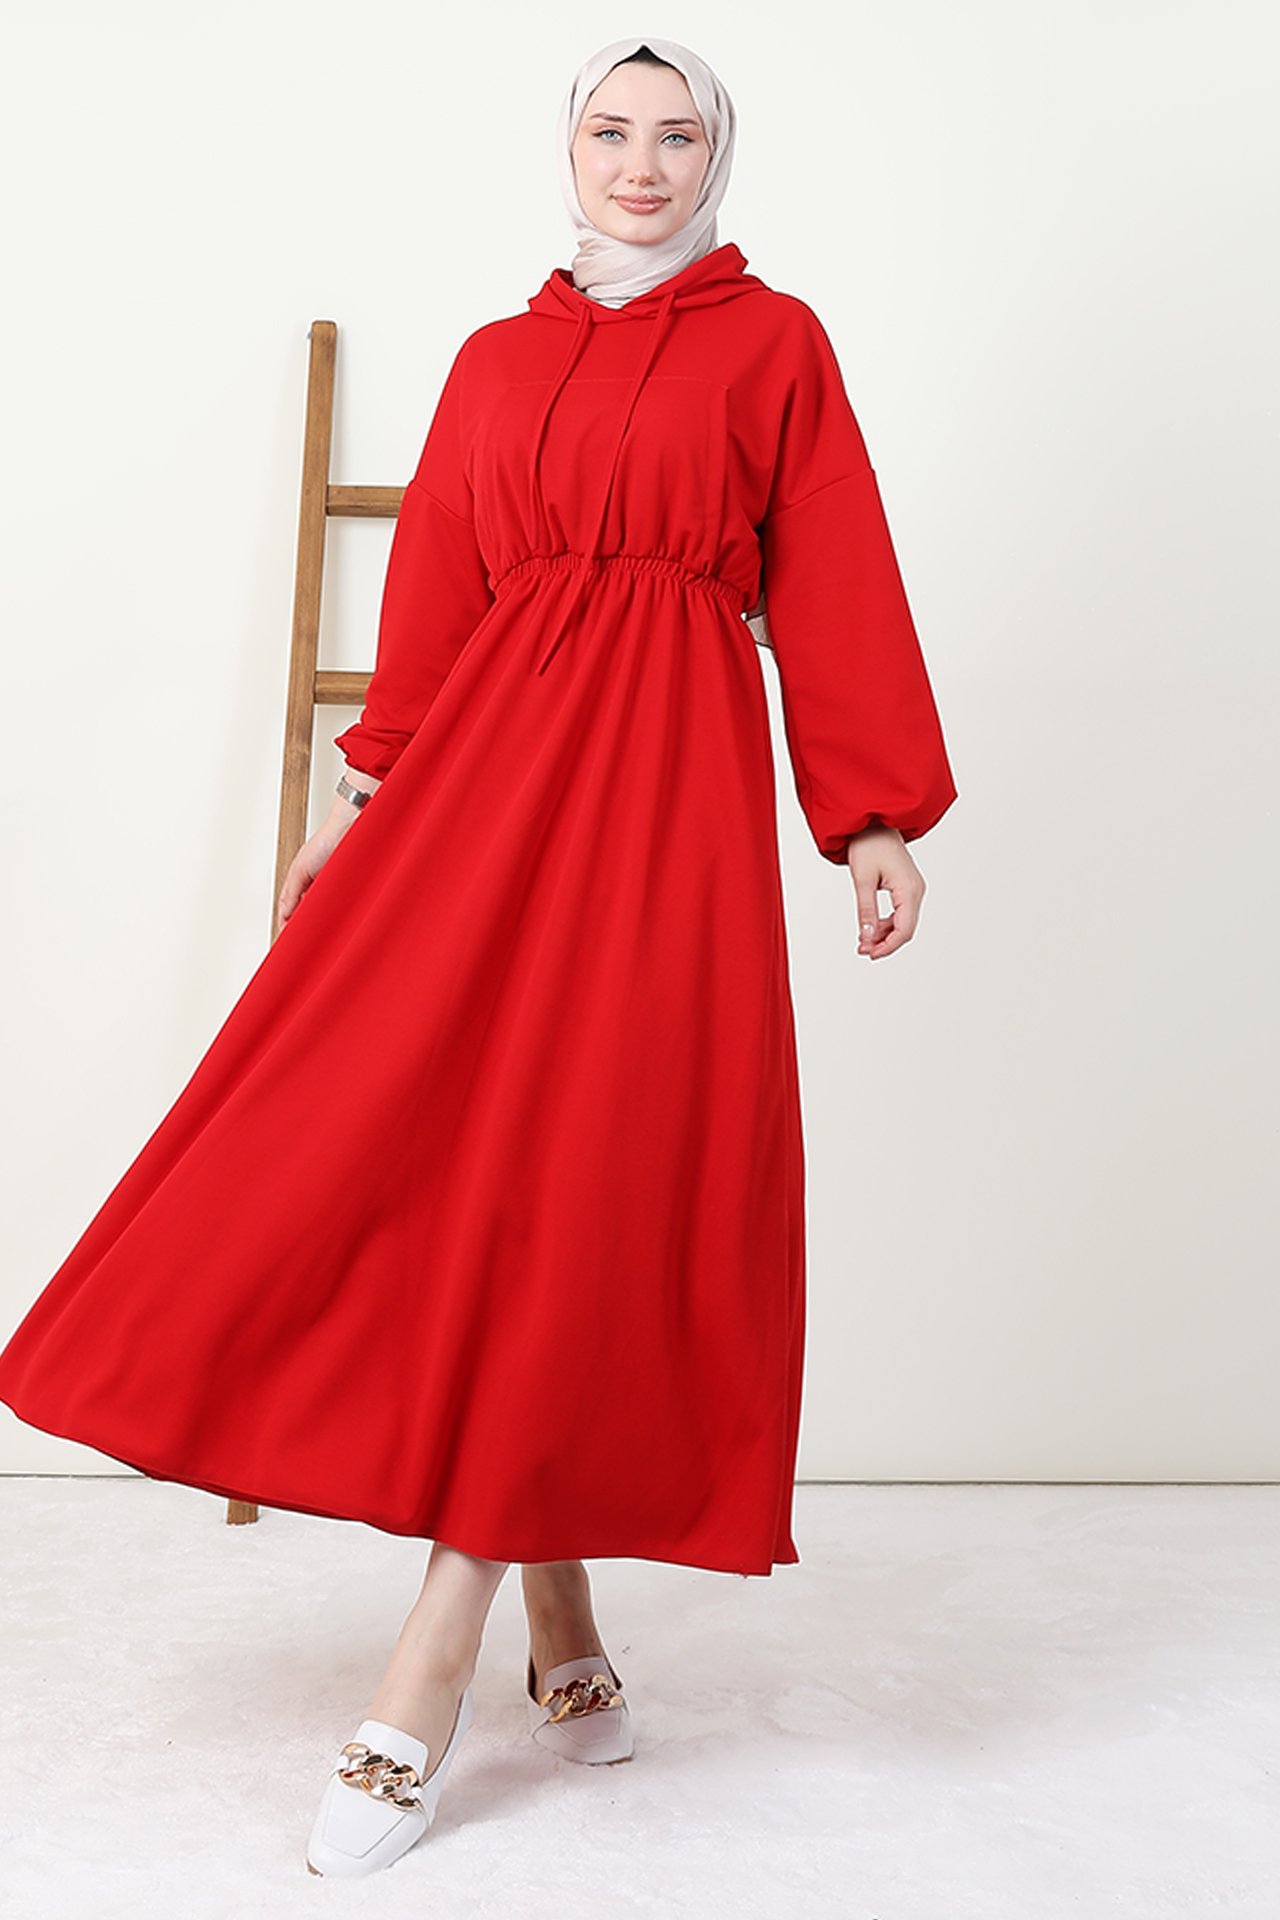 GİZAGİYİM - Göğsü Cepli Kapüşonlu Elbise Kırmızı